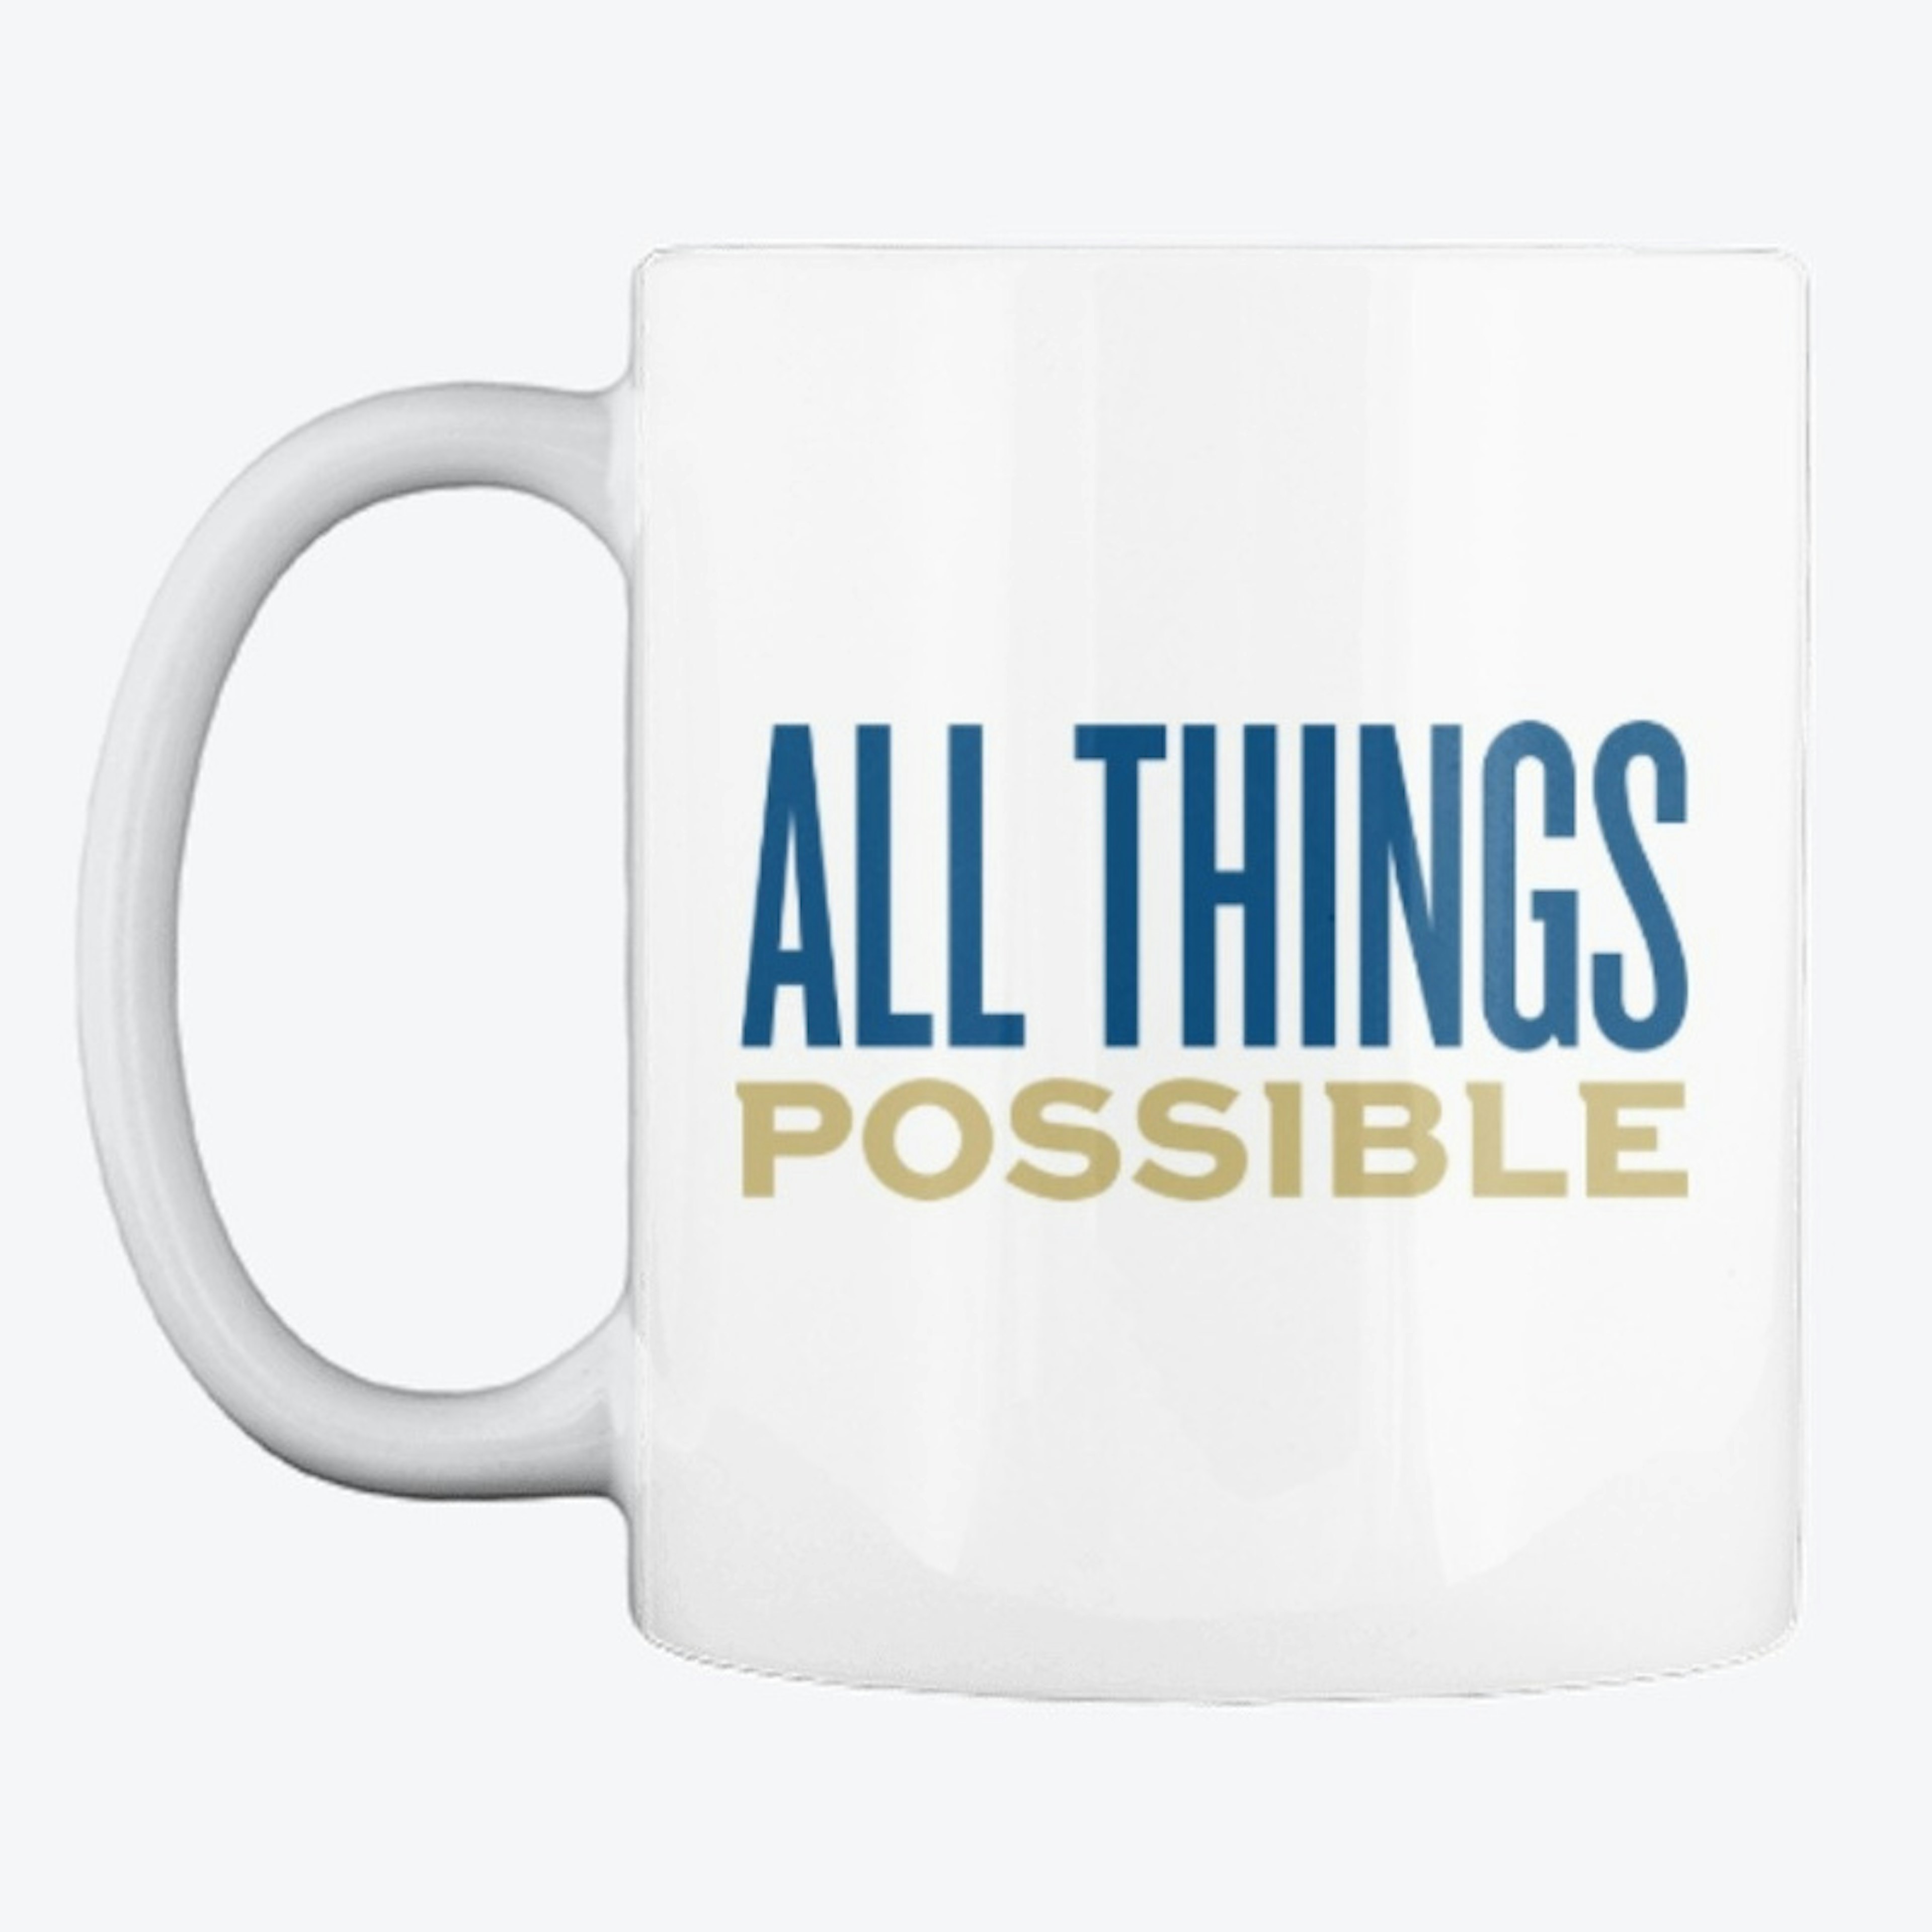 All things possible mug